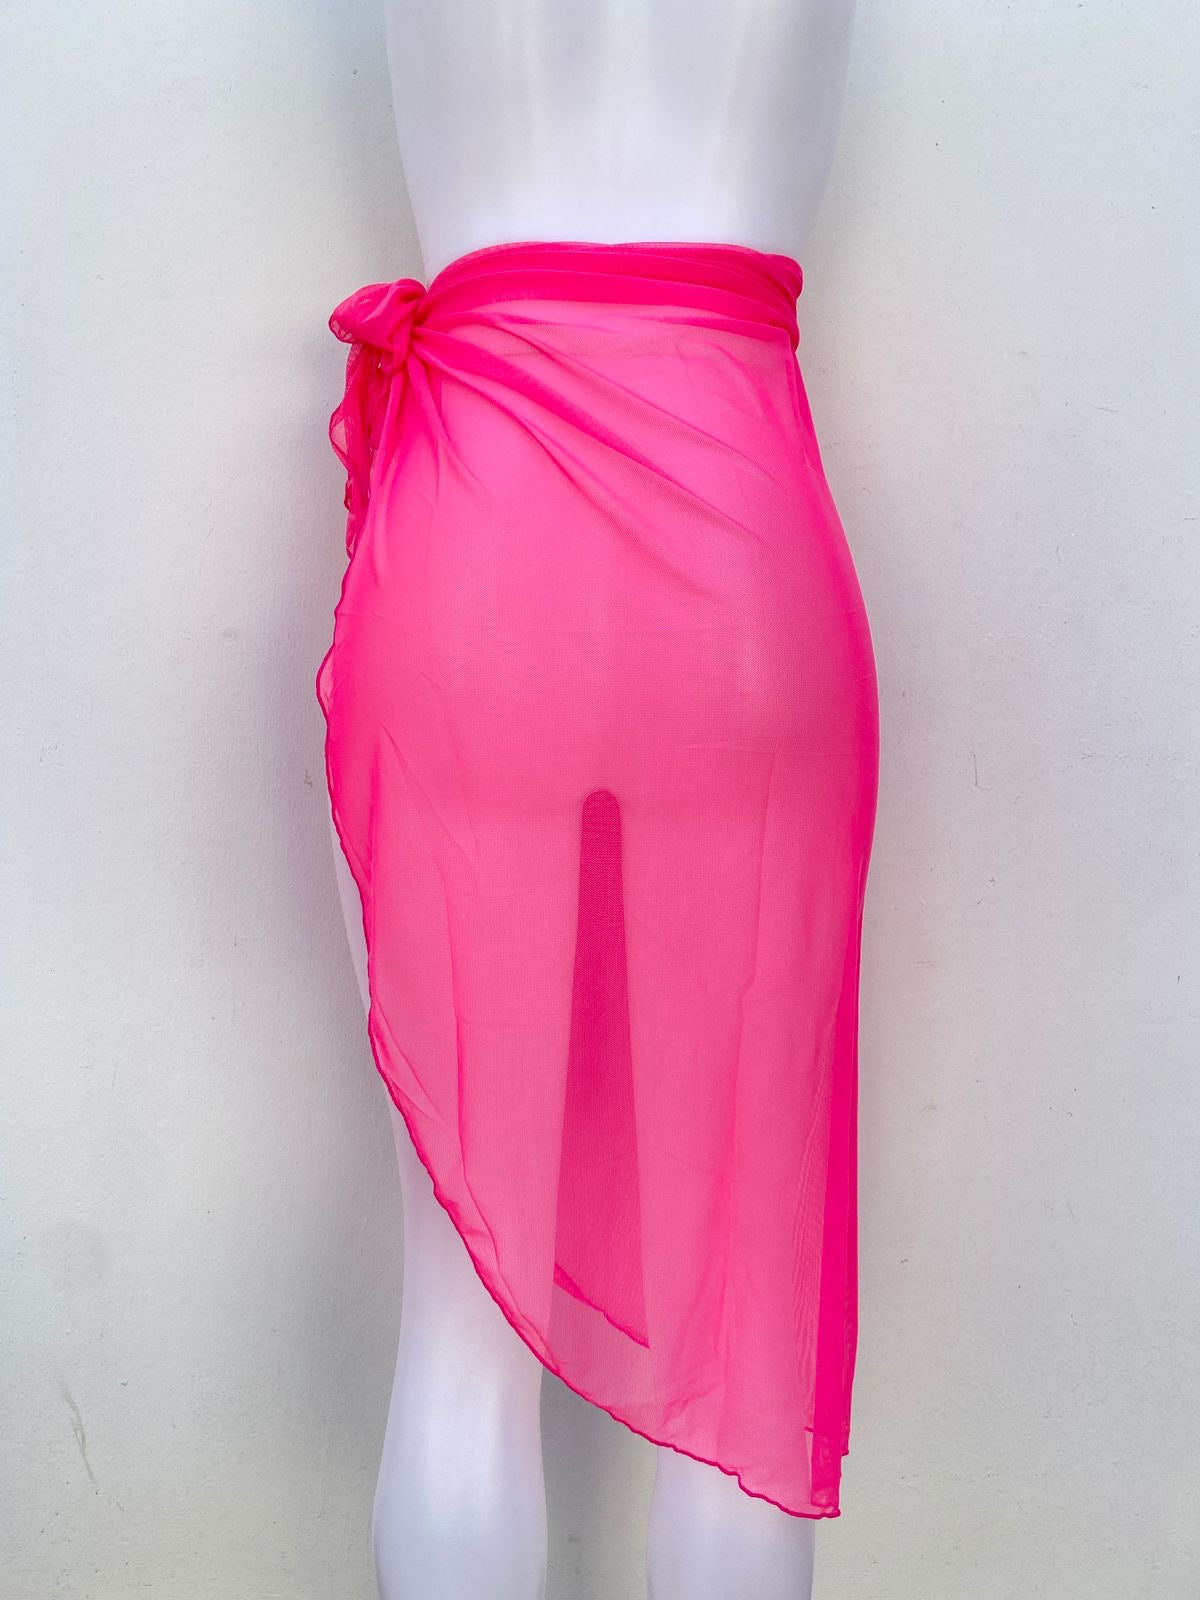 Falda/ Salida de playa Tini bikini original, rosada transparente, cover up.